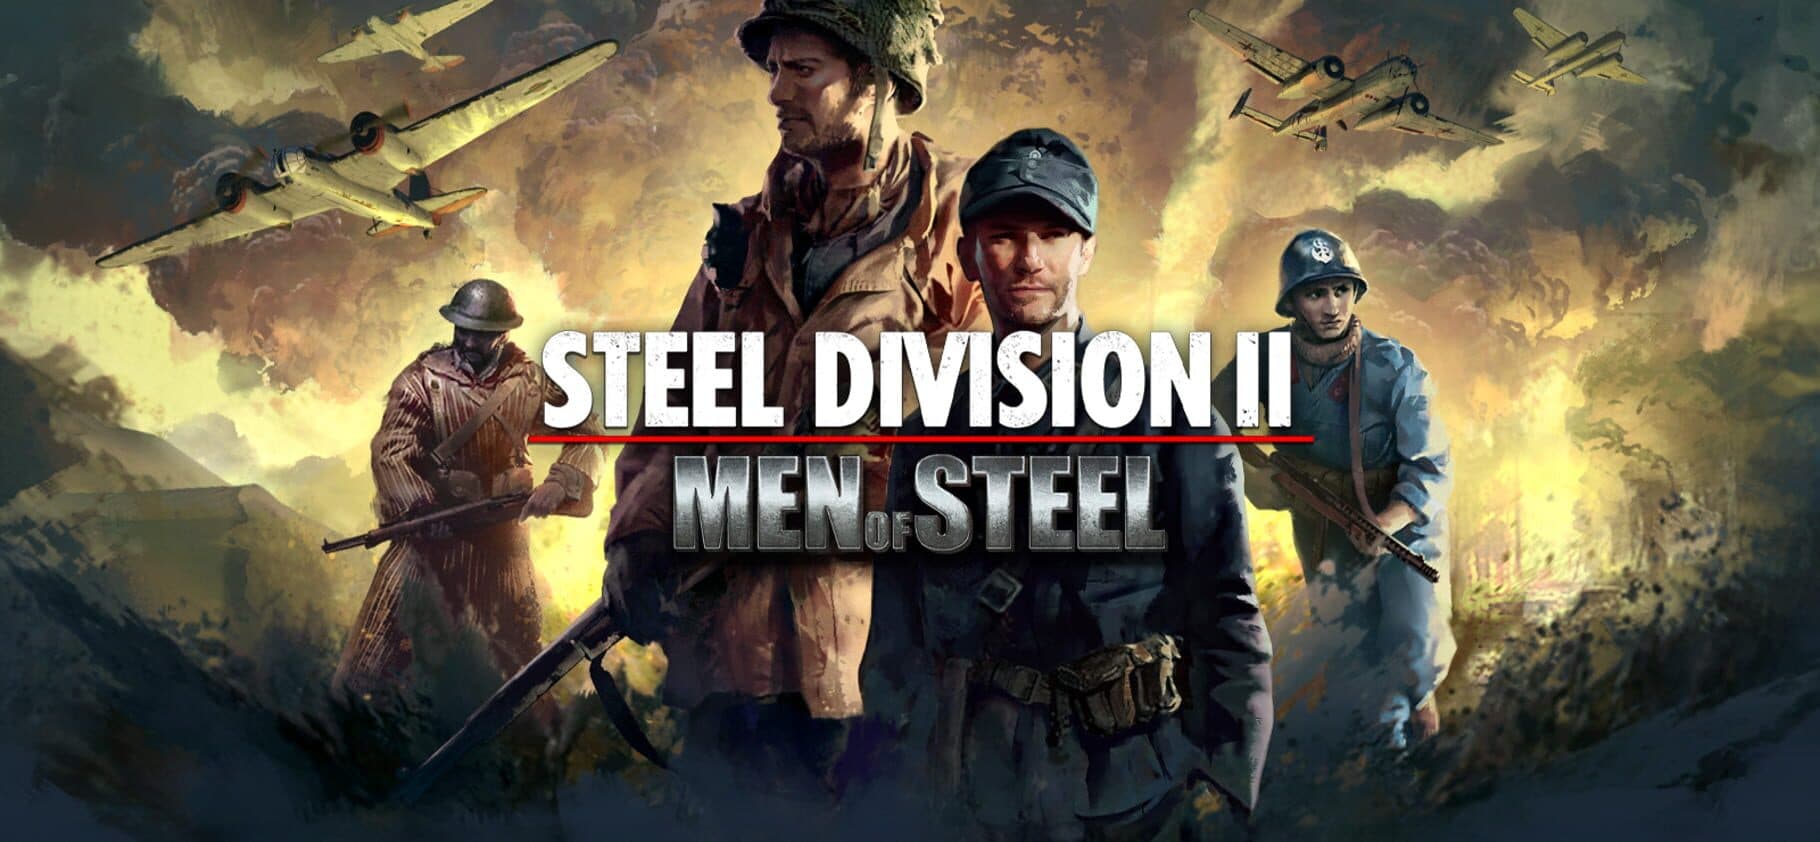 Steel Division 2: Men of Steel Image